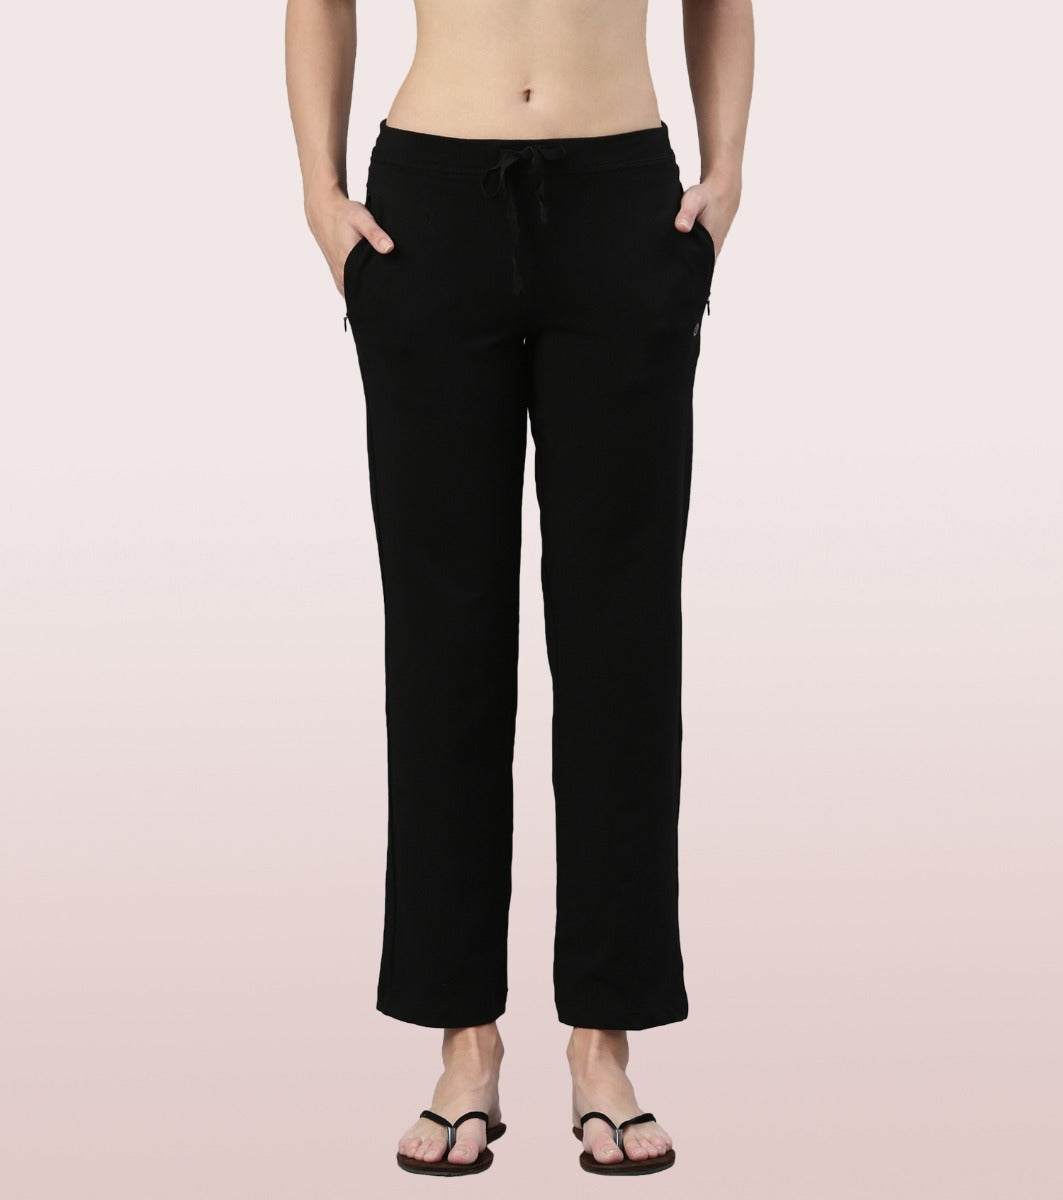 Buy Black Lounge Pants online at best price in India - Inwear